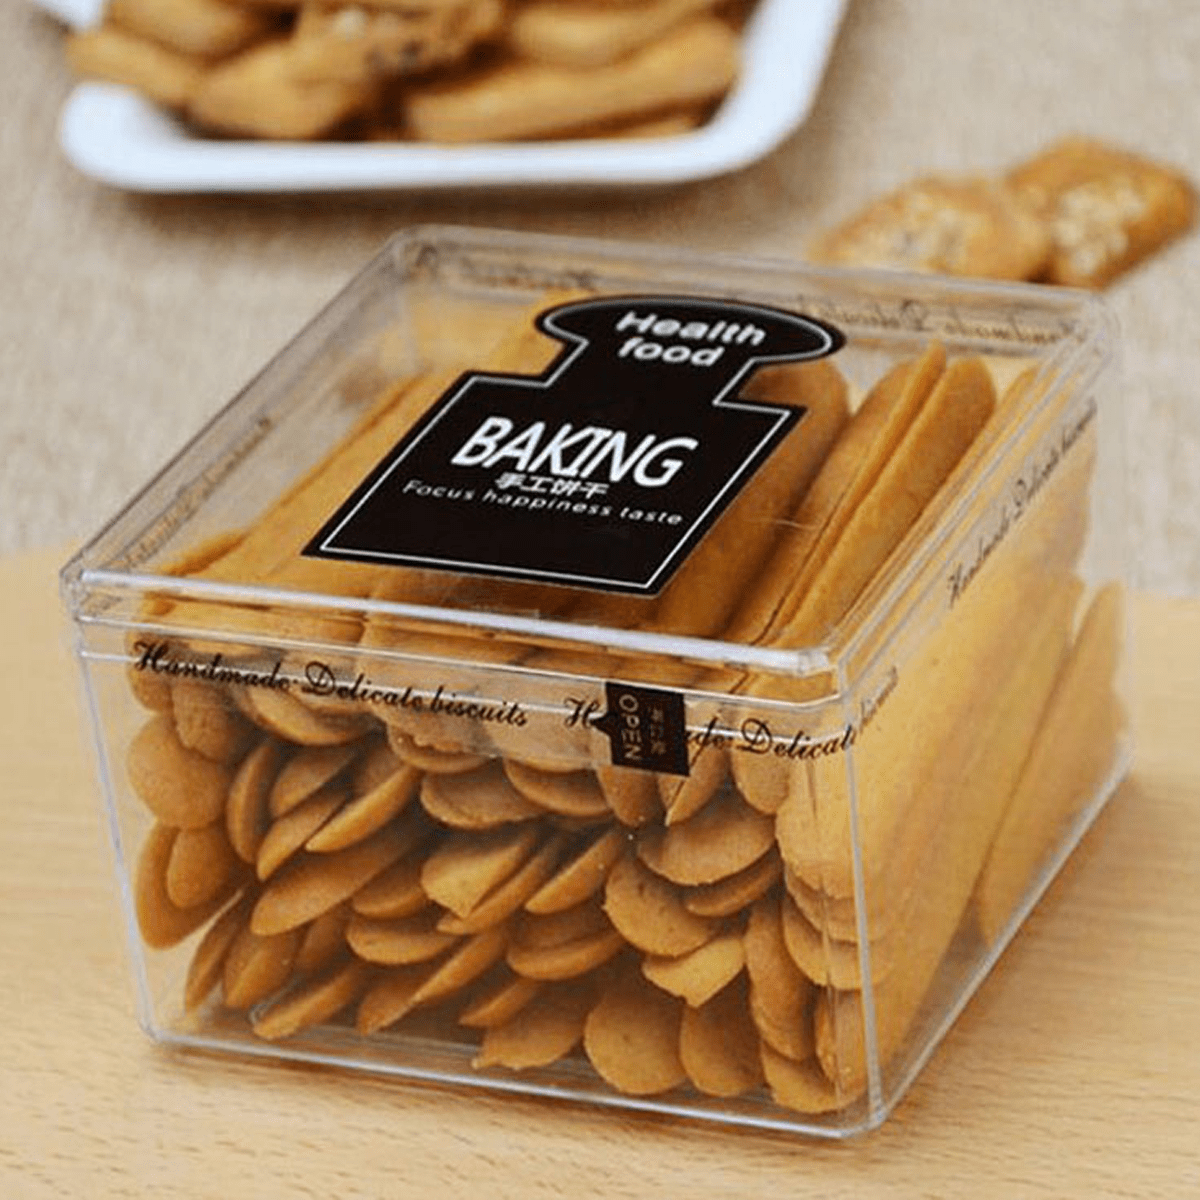 Plastic Food Grade PS Clear Cake DIY Cookies Box Biscuit Packing 50pcs/ Pack 8.5*8.5*6.5cm